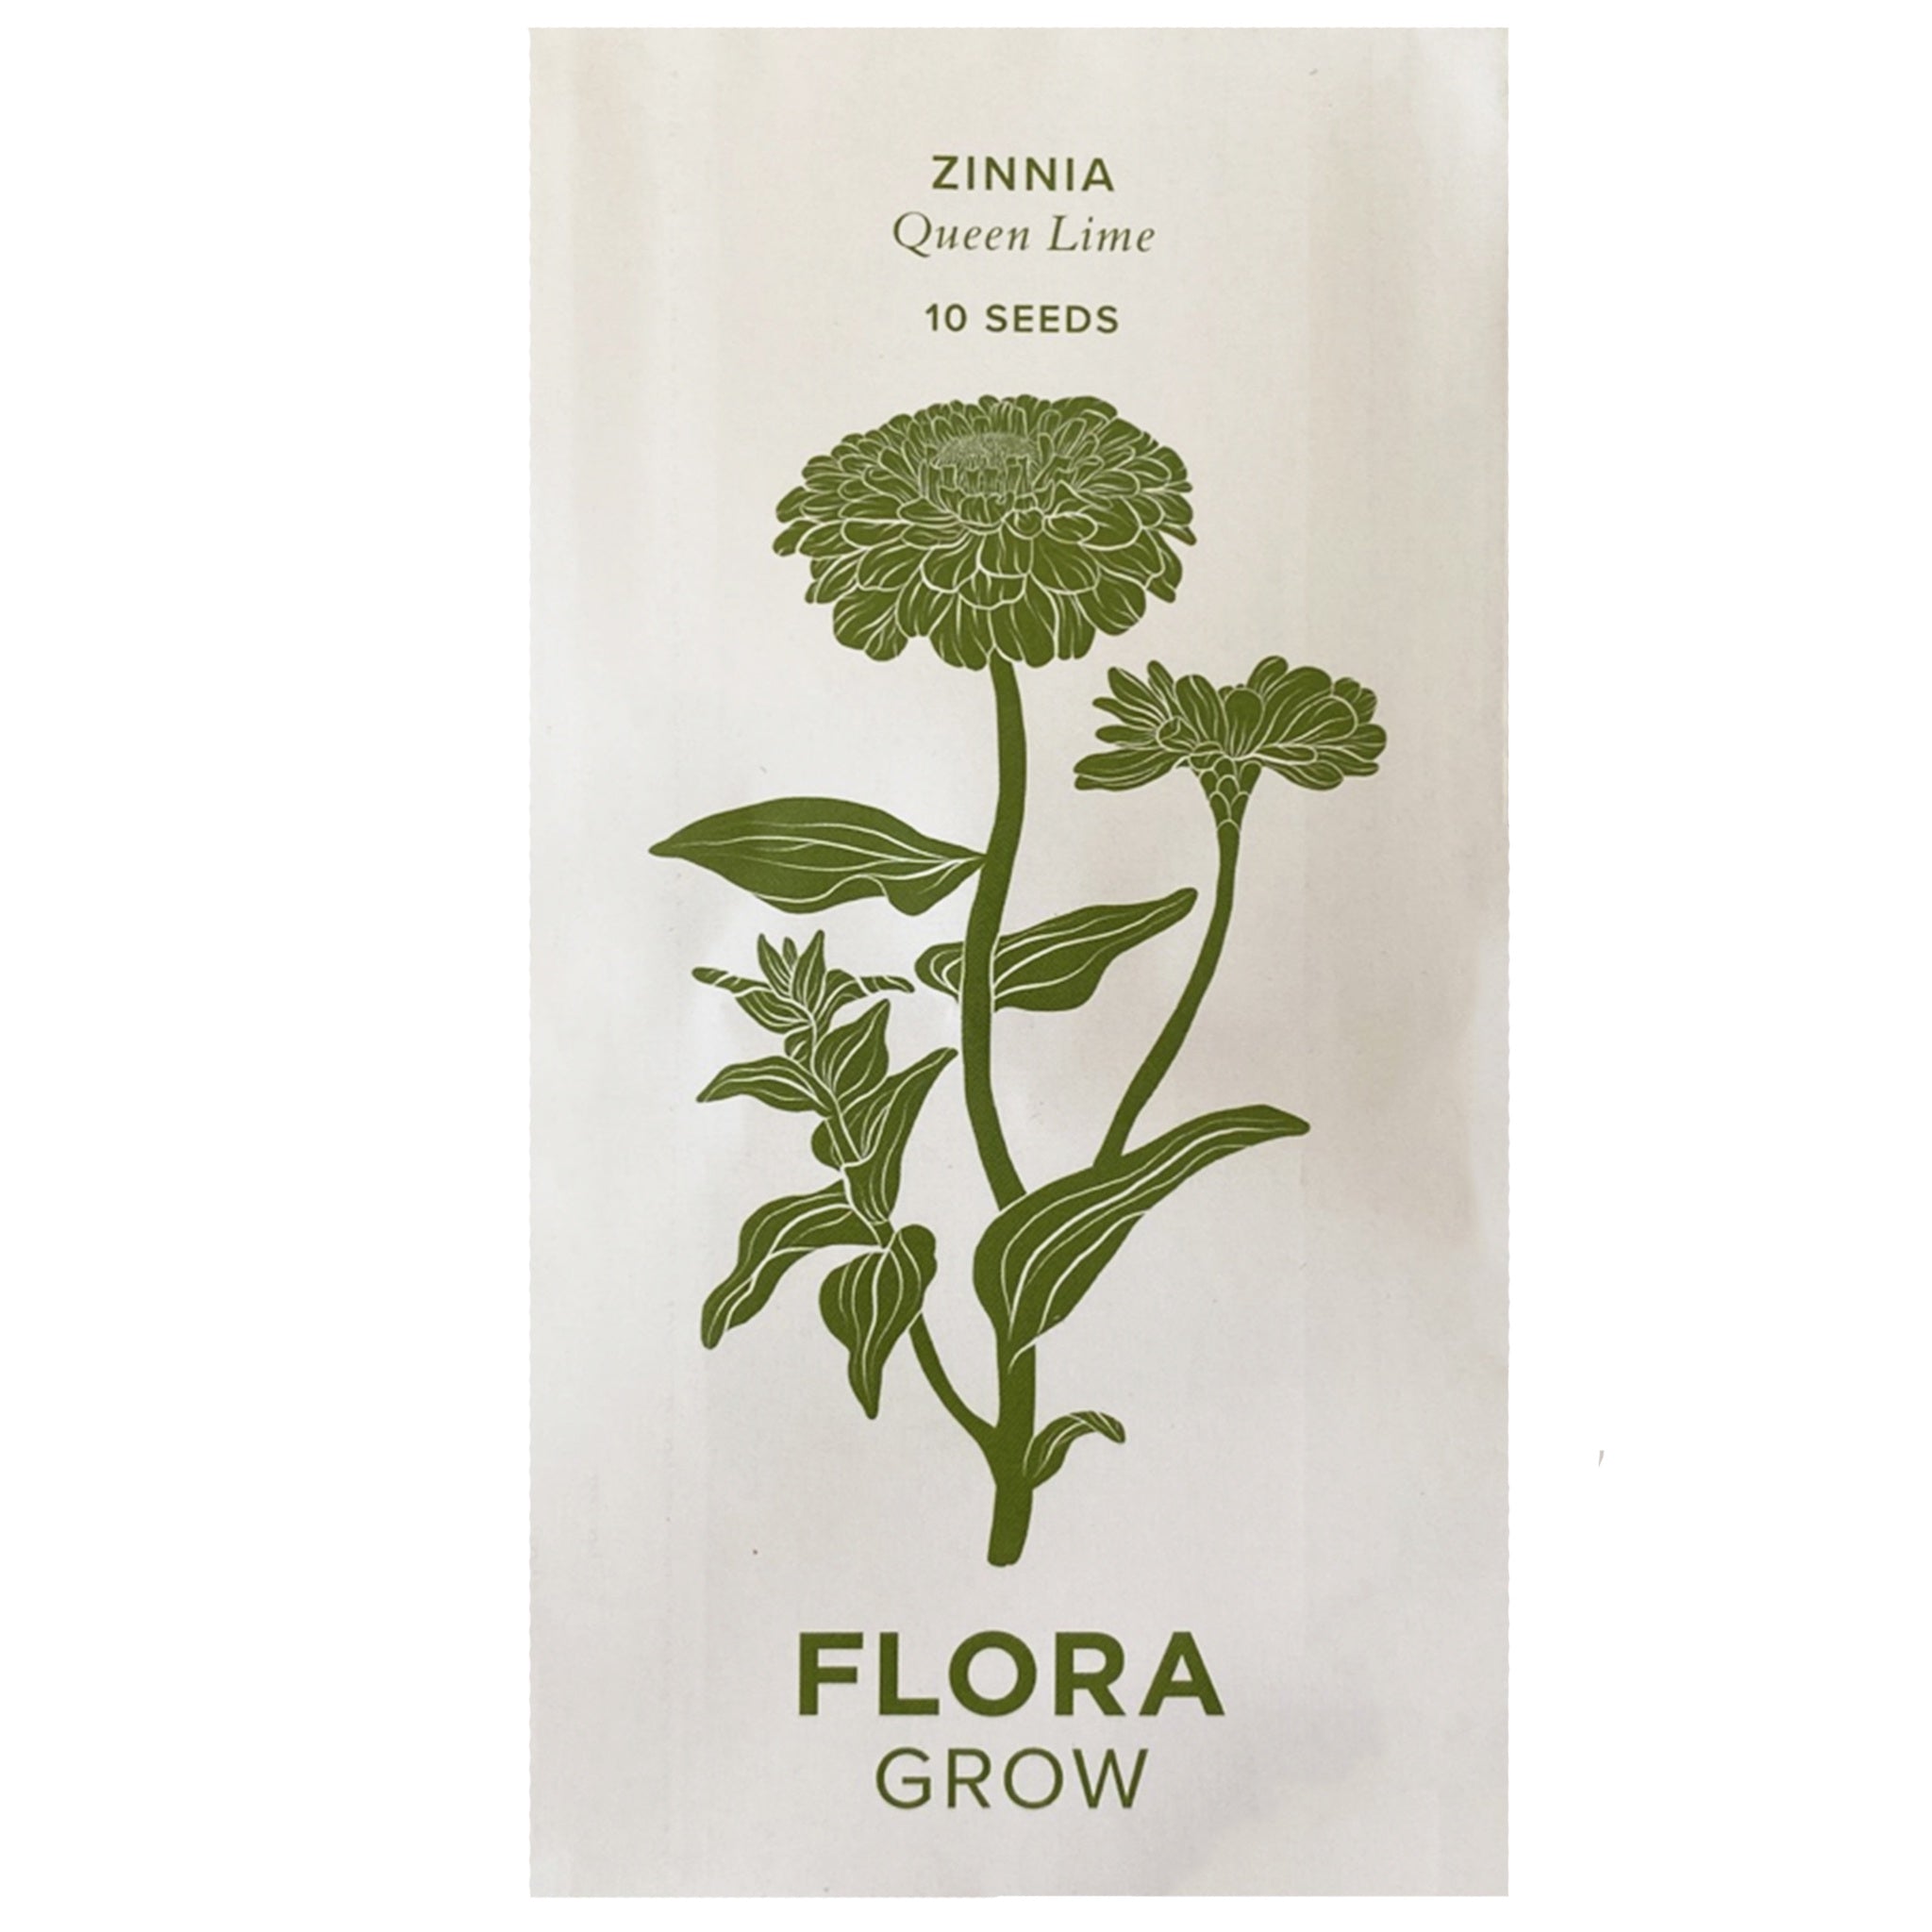 Flora Grow Zinnia Queen Lime Seed Pack